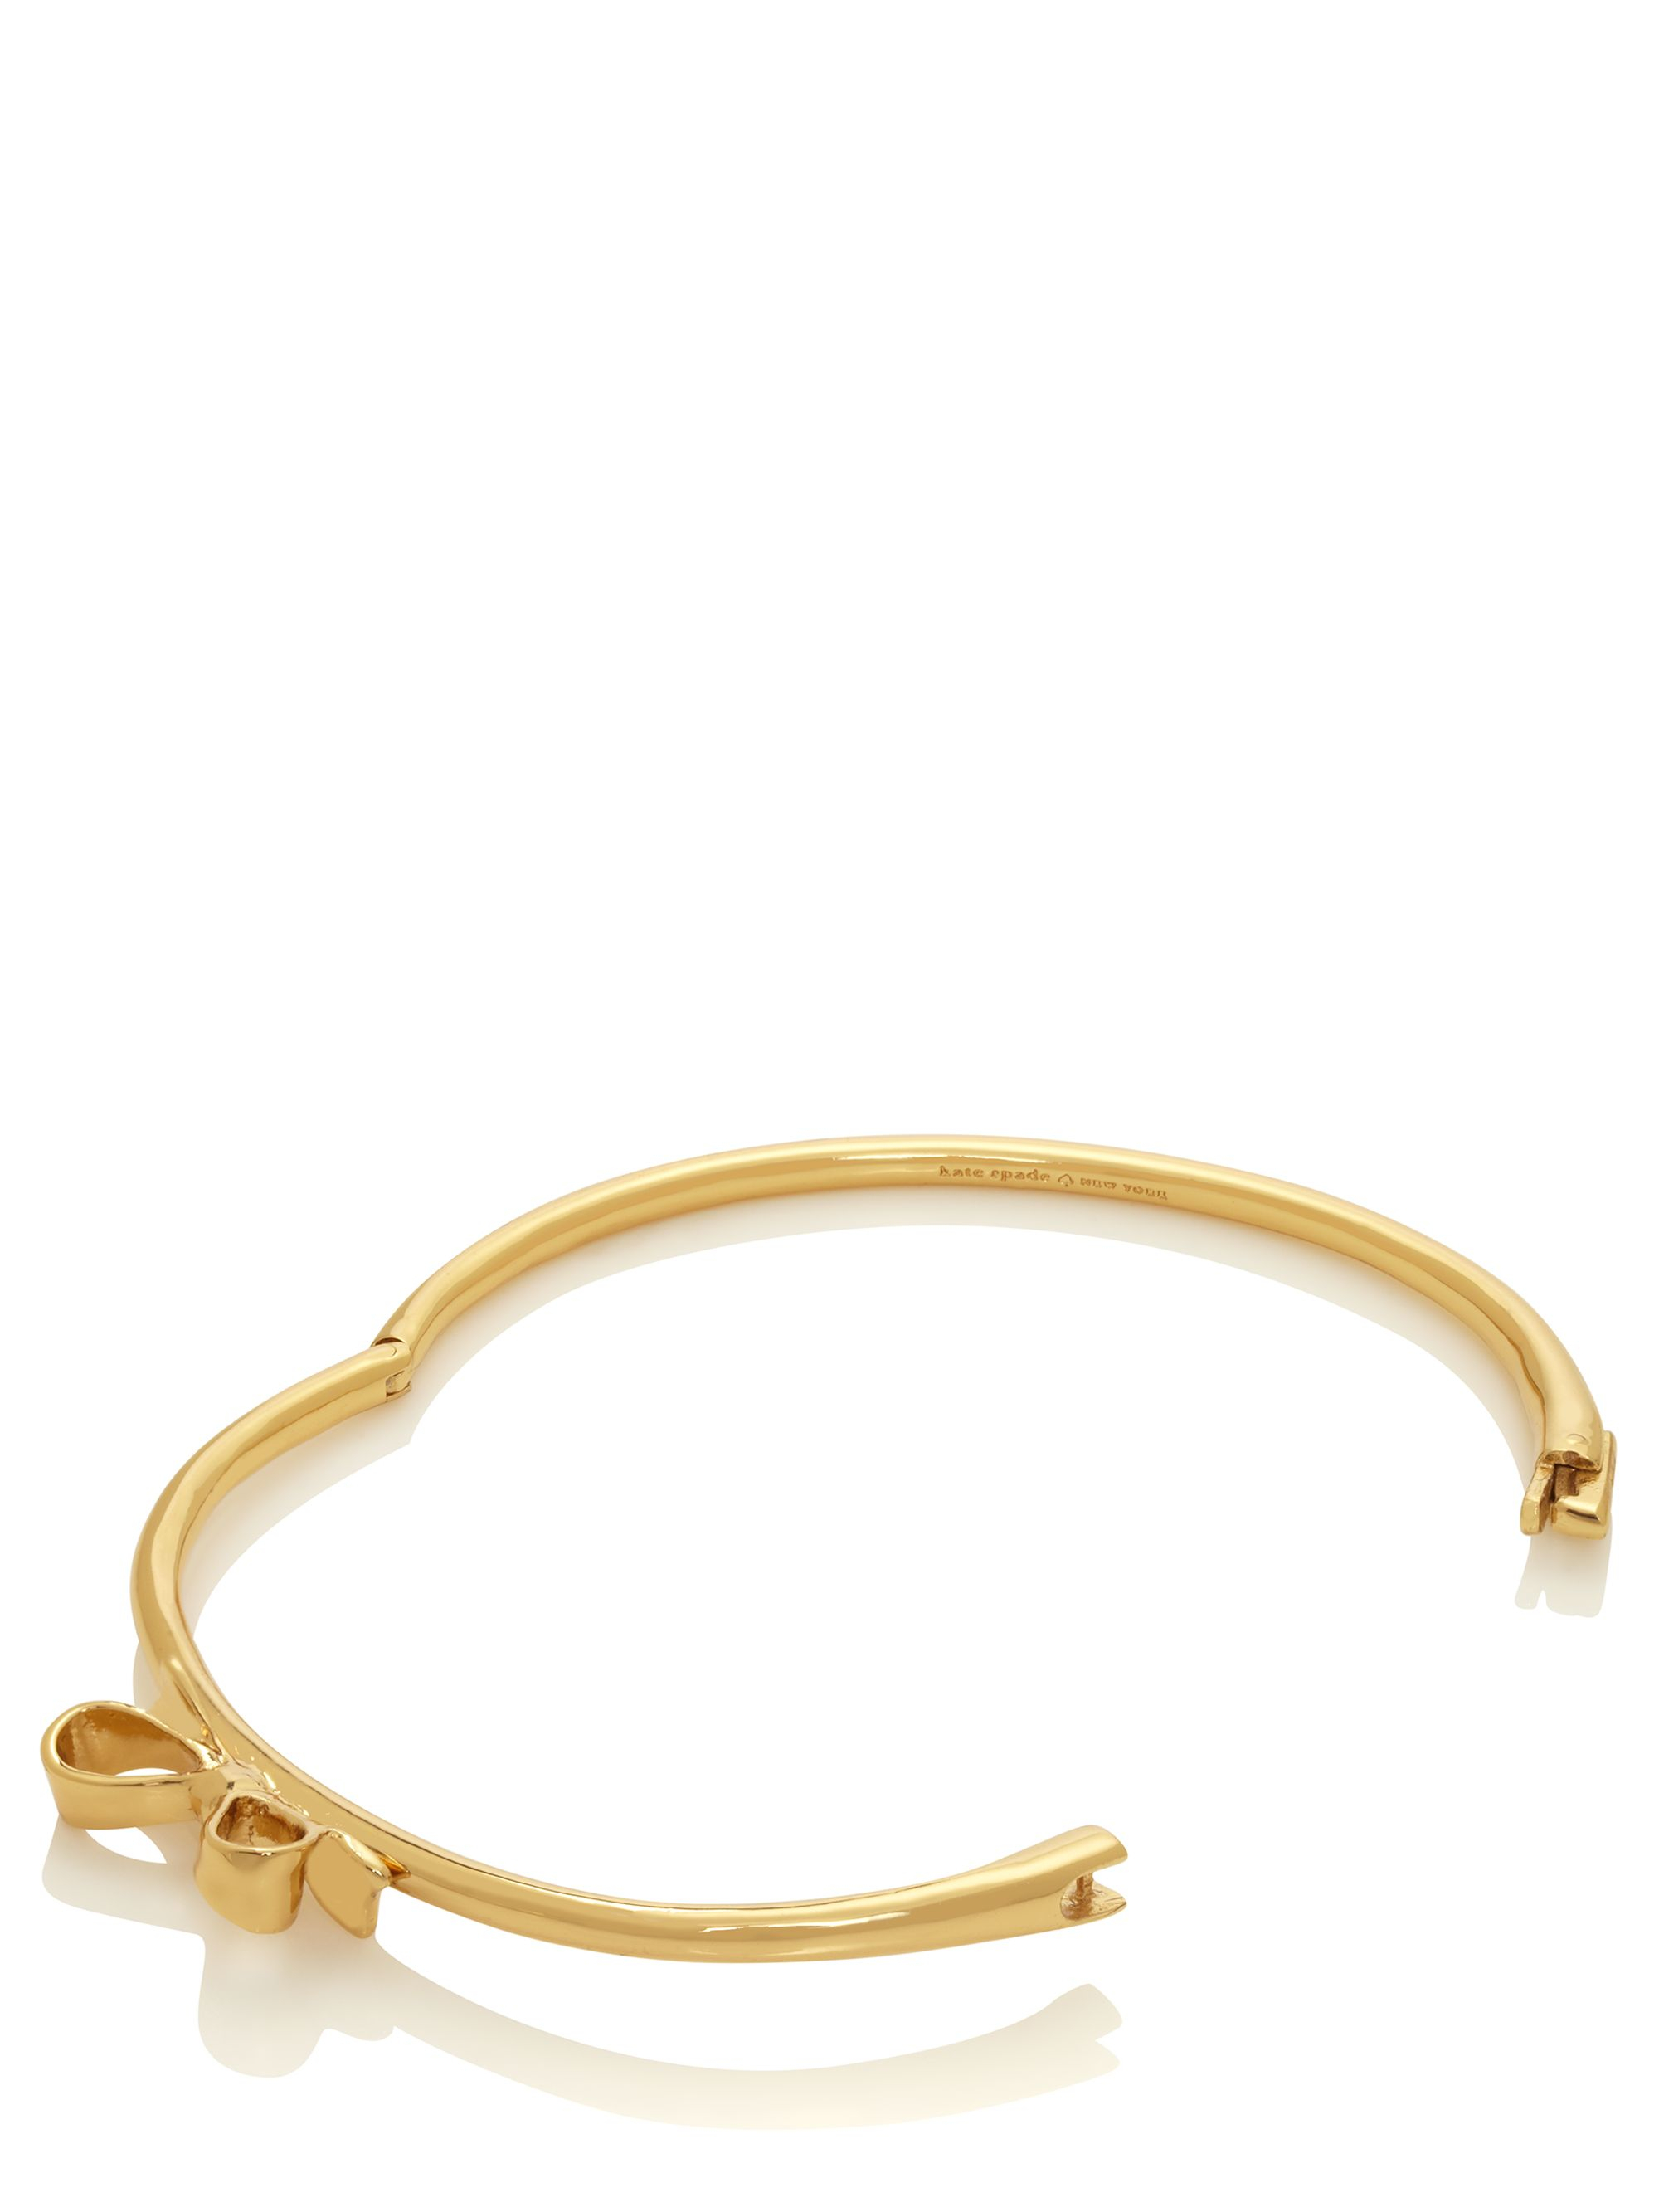 Shop kate spade new york 2021 SS Elegant Style Outlet Bracelets (o0r00155)  by mishuglay | BUYMA